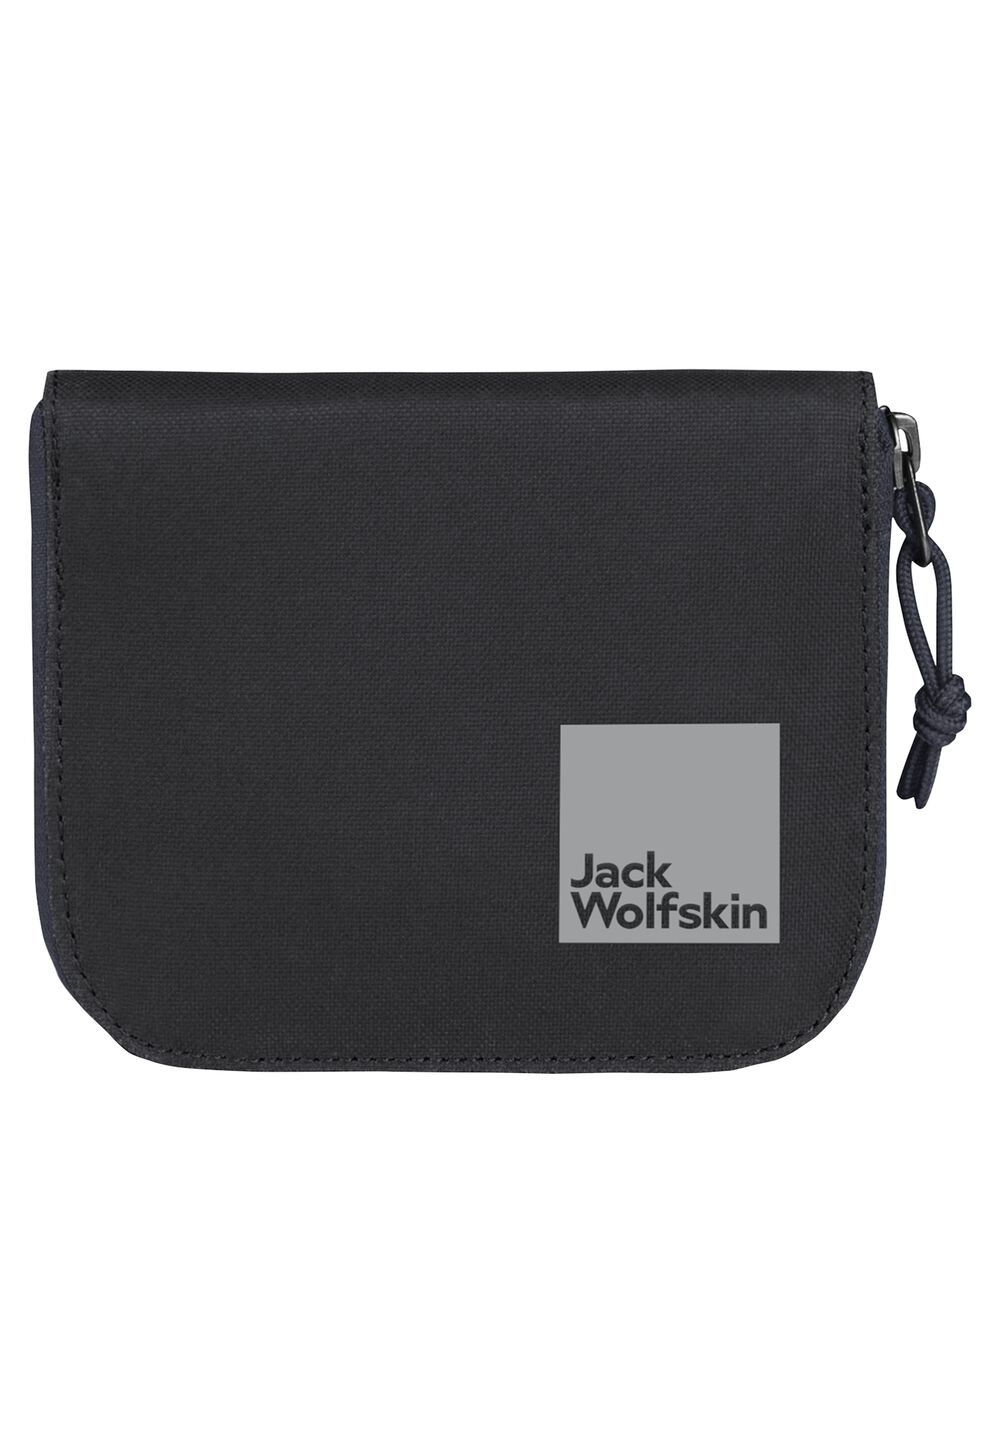 Jack Wolfskin Konya Pouches&Wallets Portemonnee one size zwart black